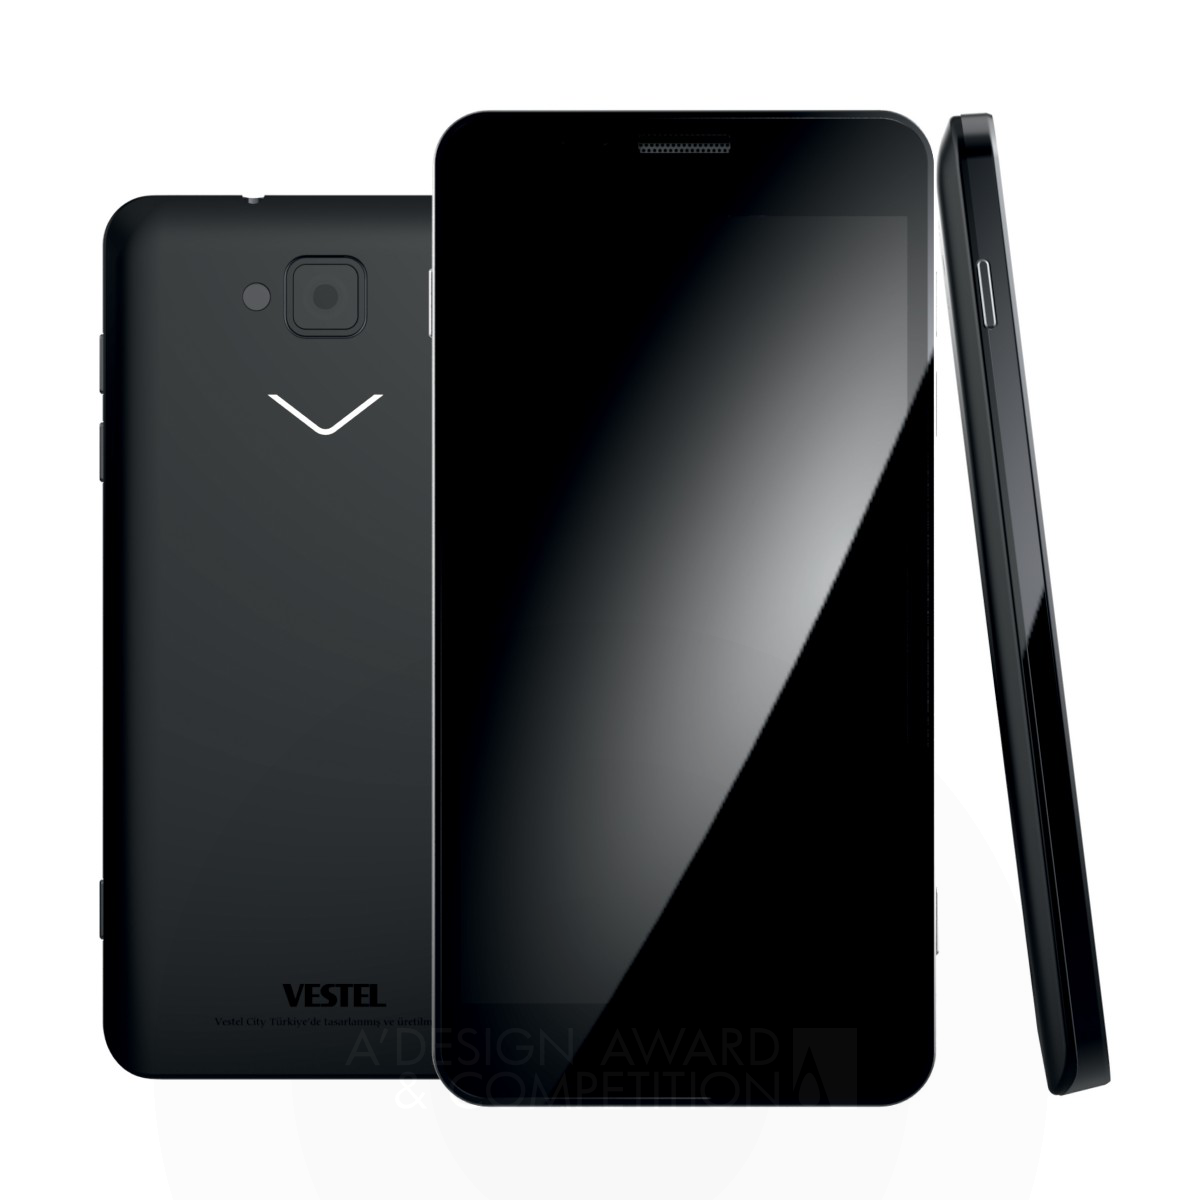 Glasson smart phone smart phone by Vestel ID Team